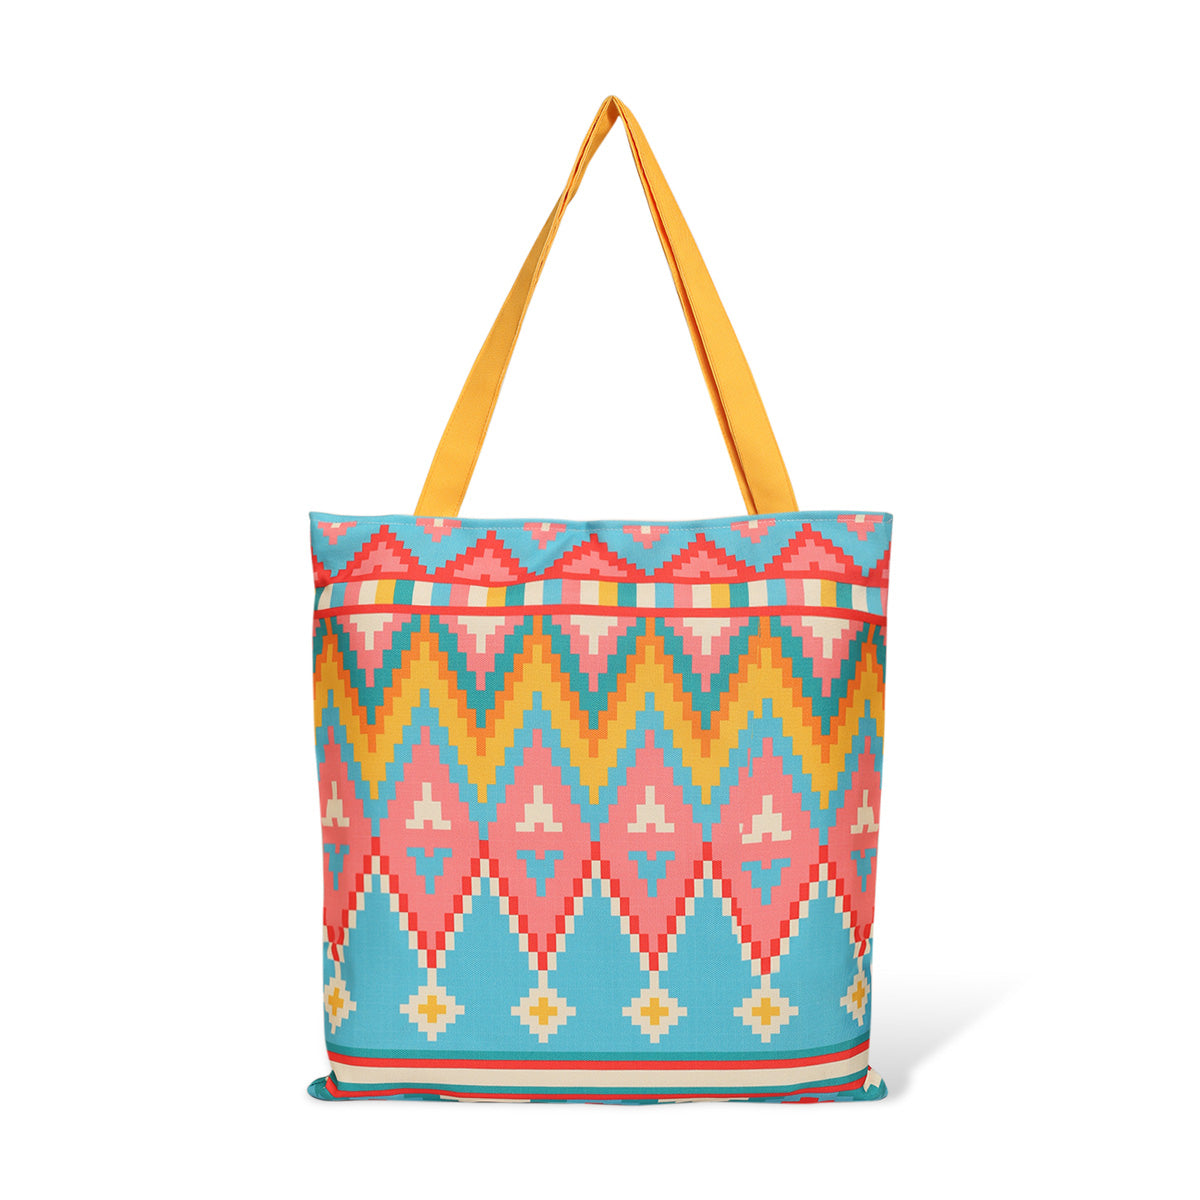 Vibrant tote bag with geometric design.